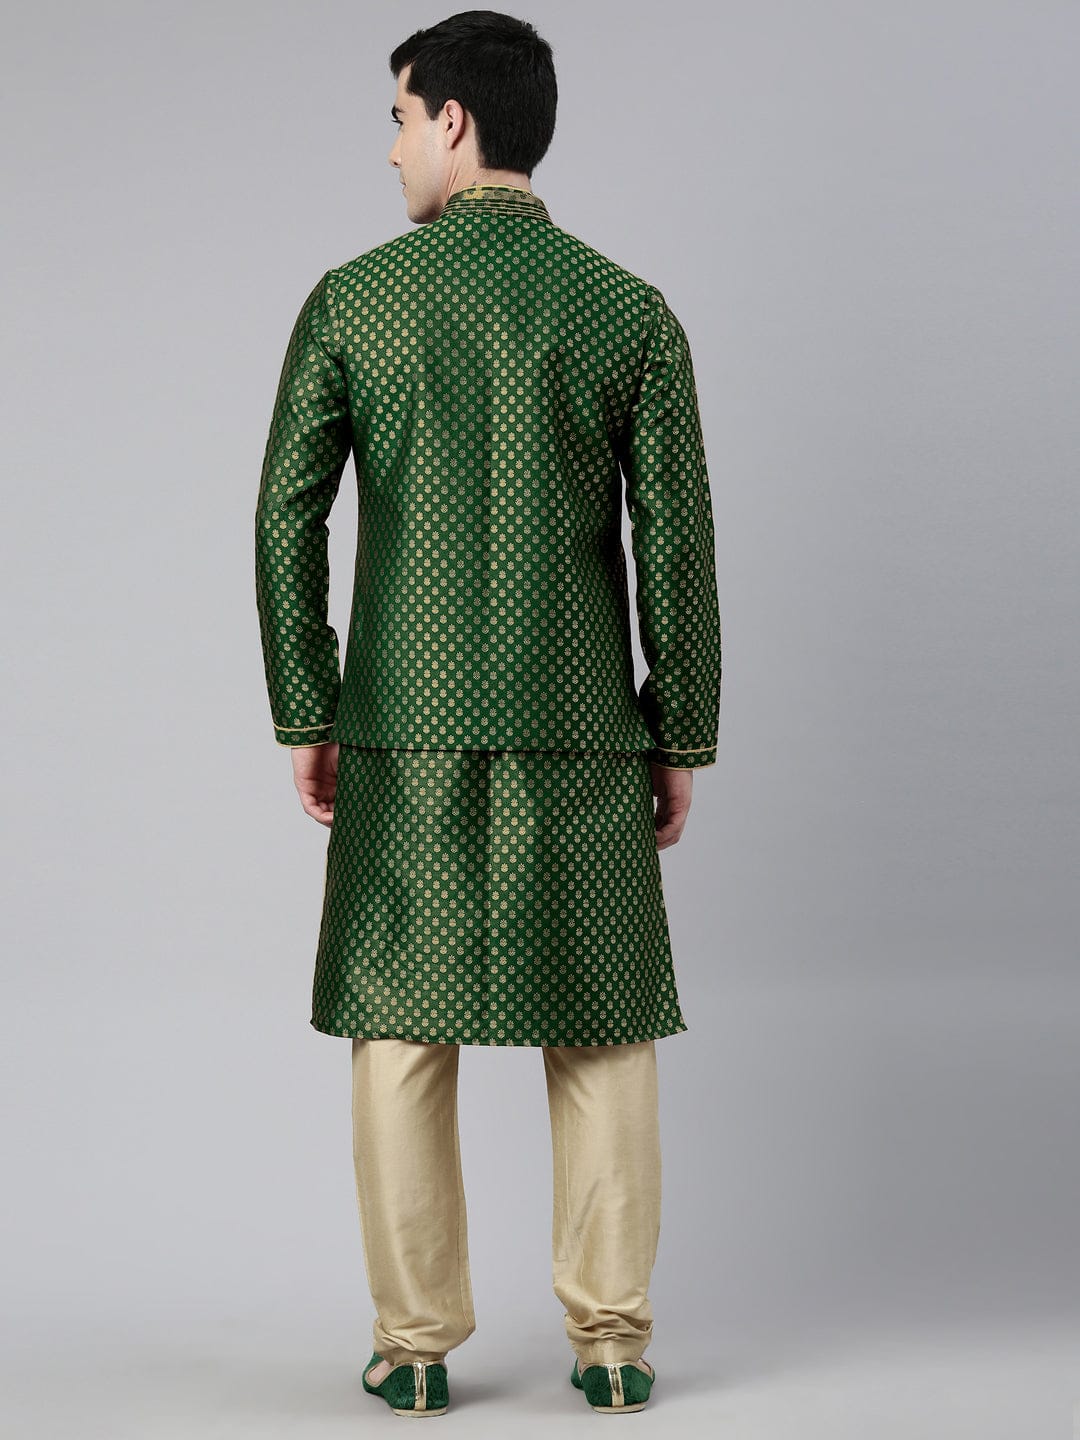 Green Brocade Jacket